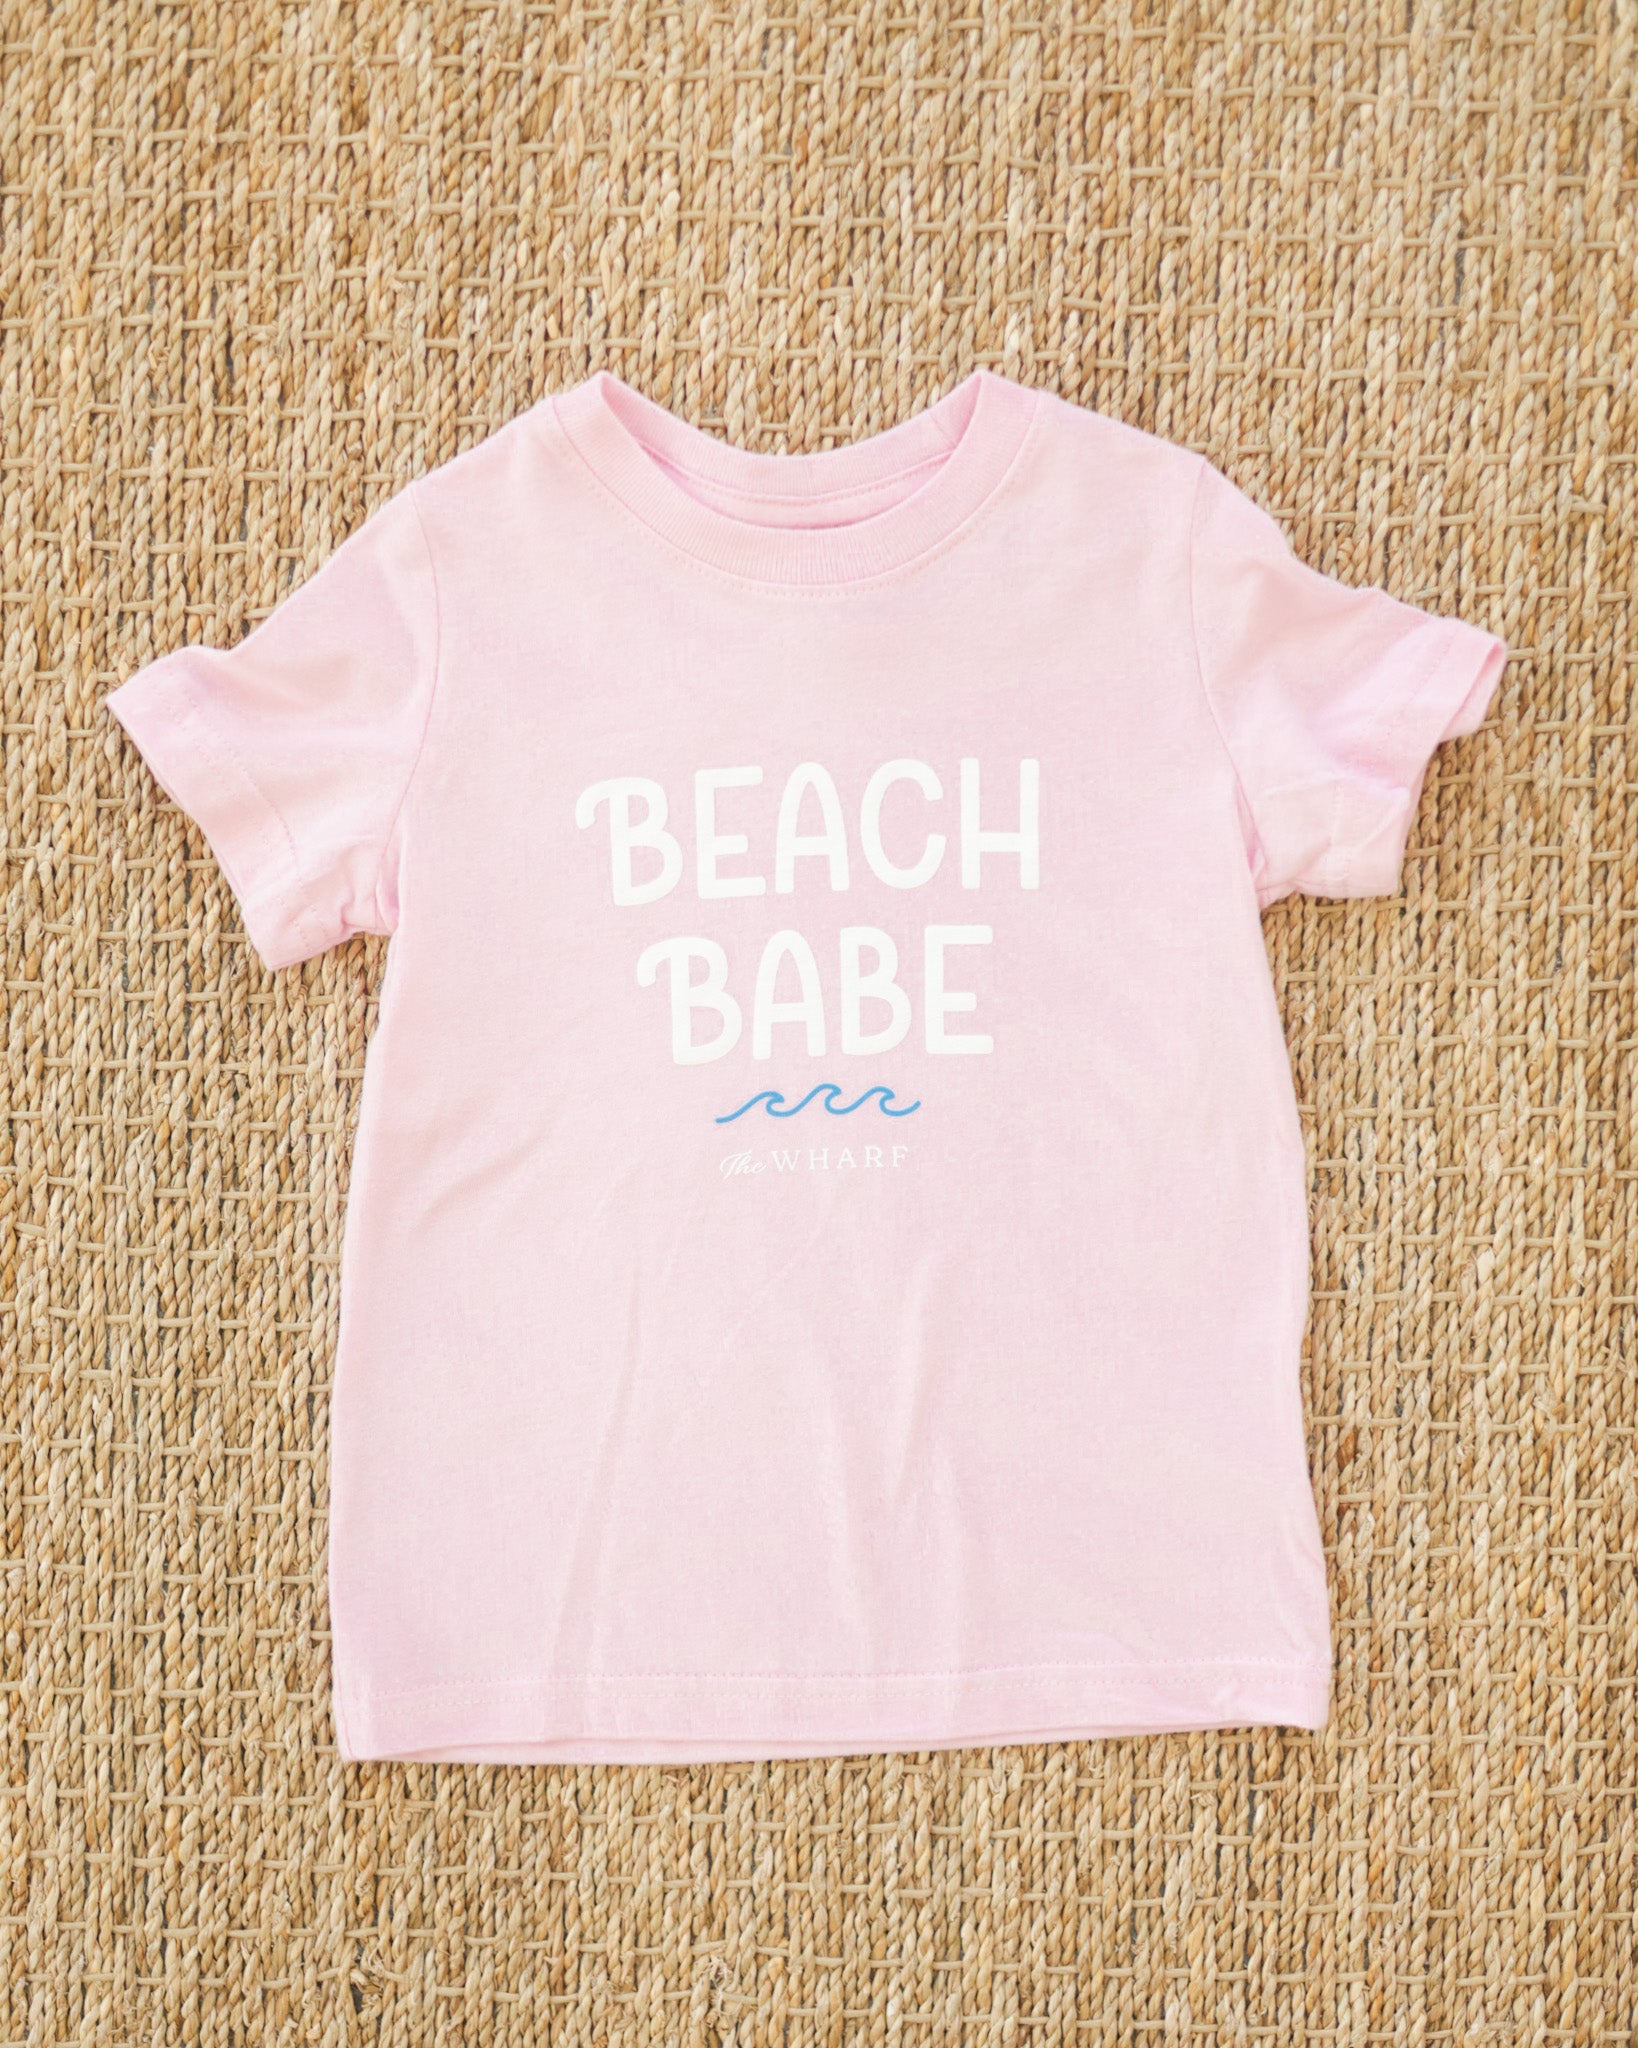 Beach Babe Toddler Tee